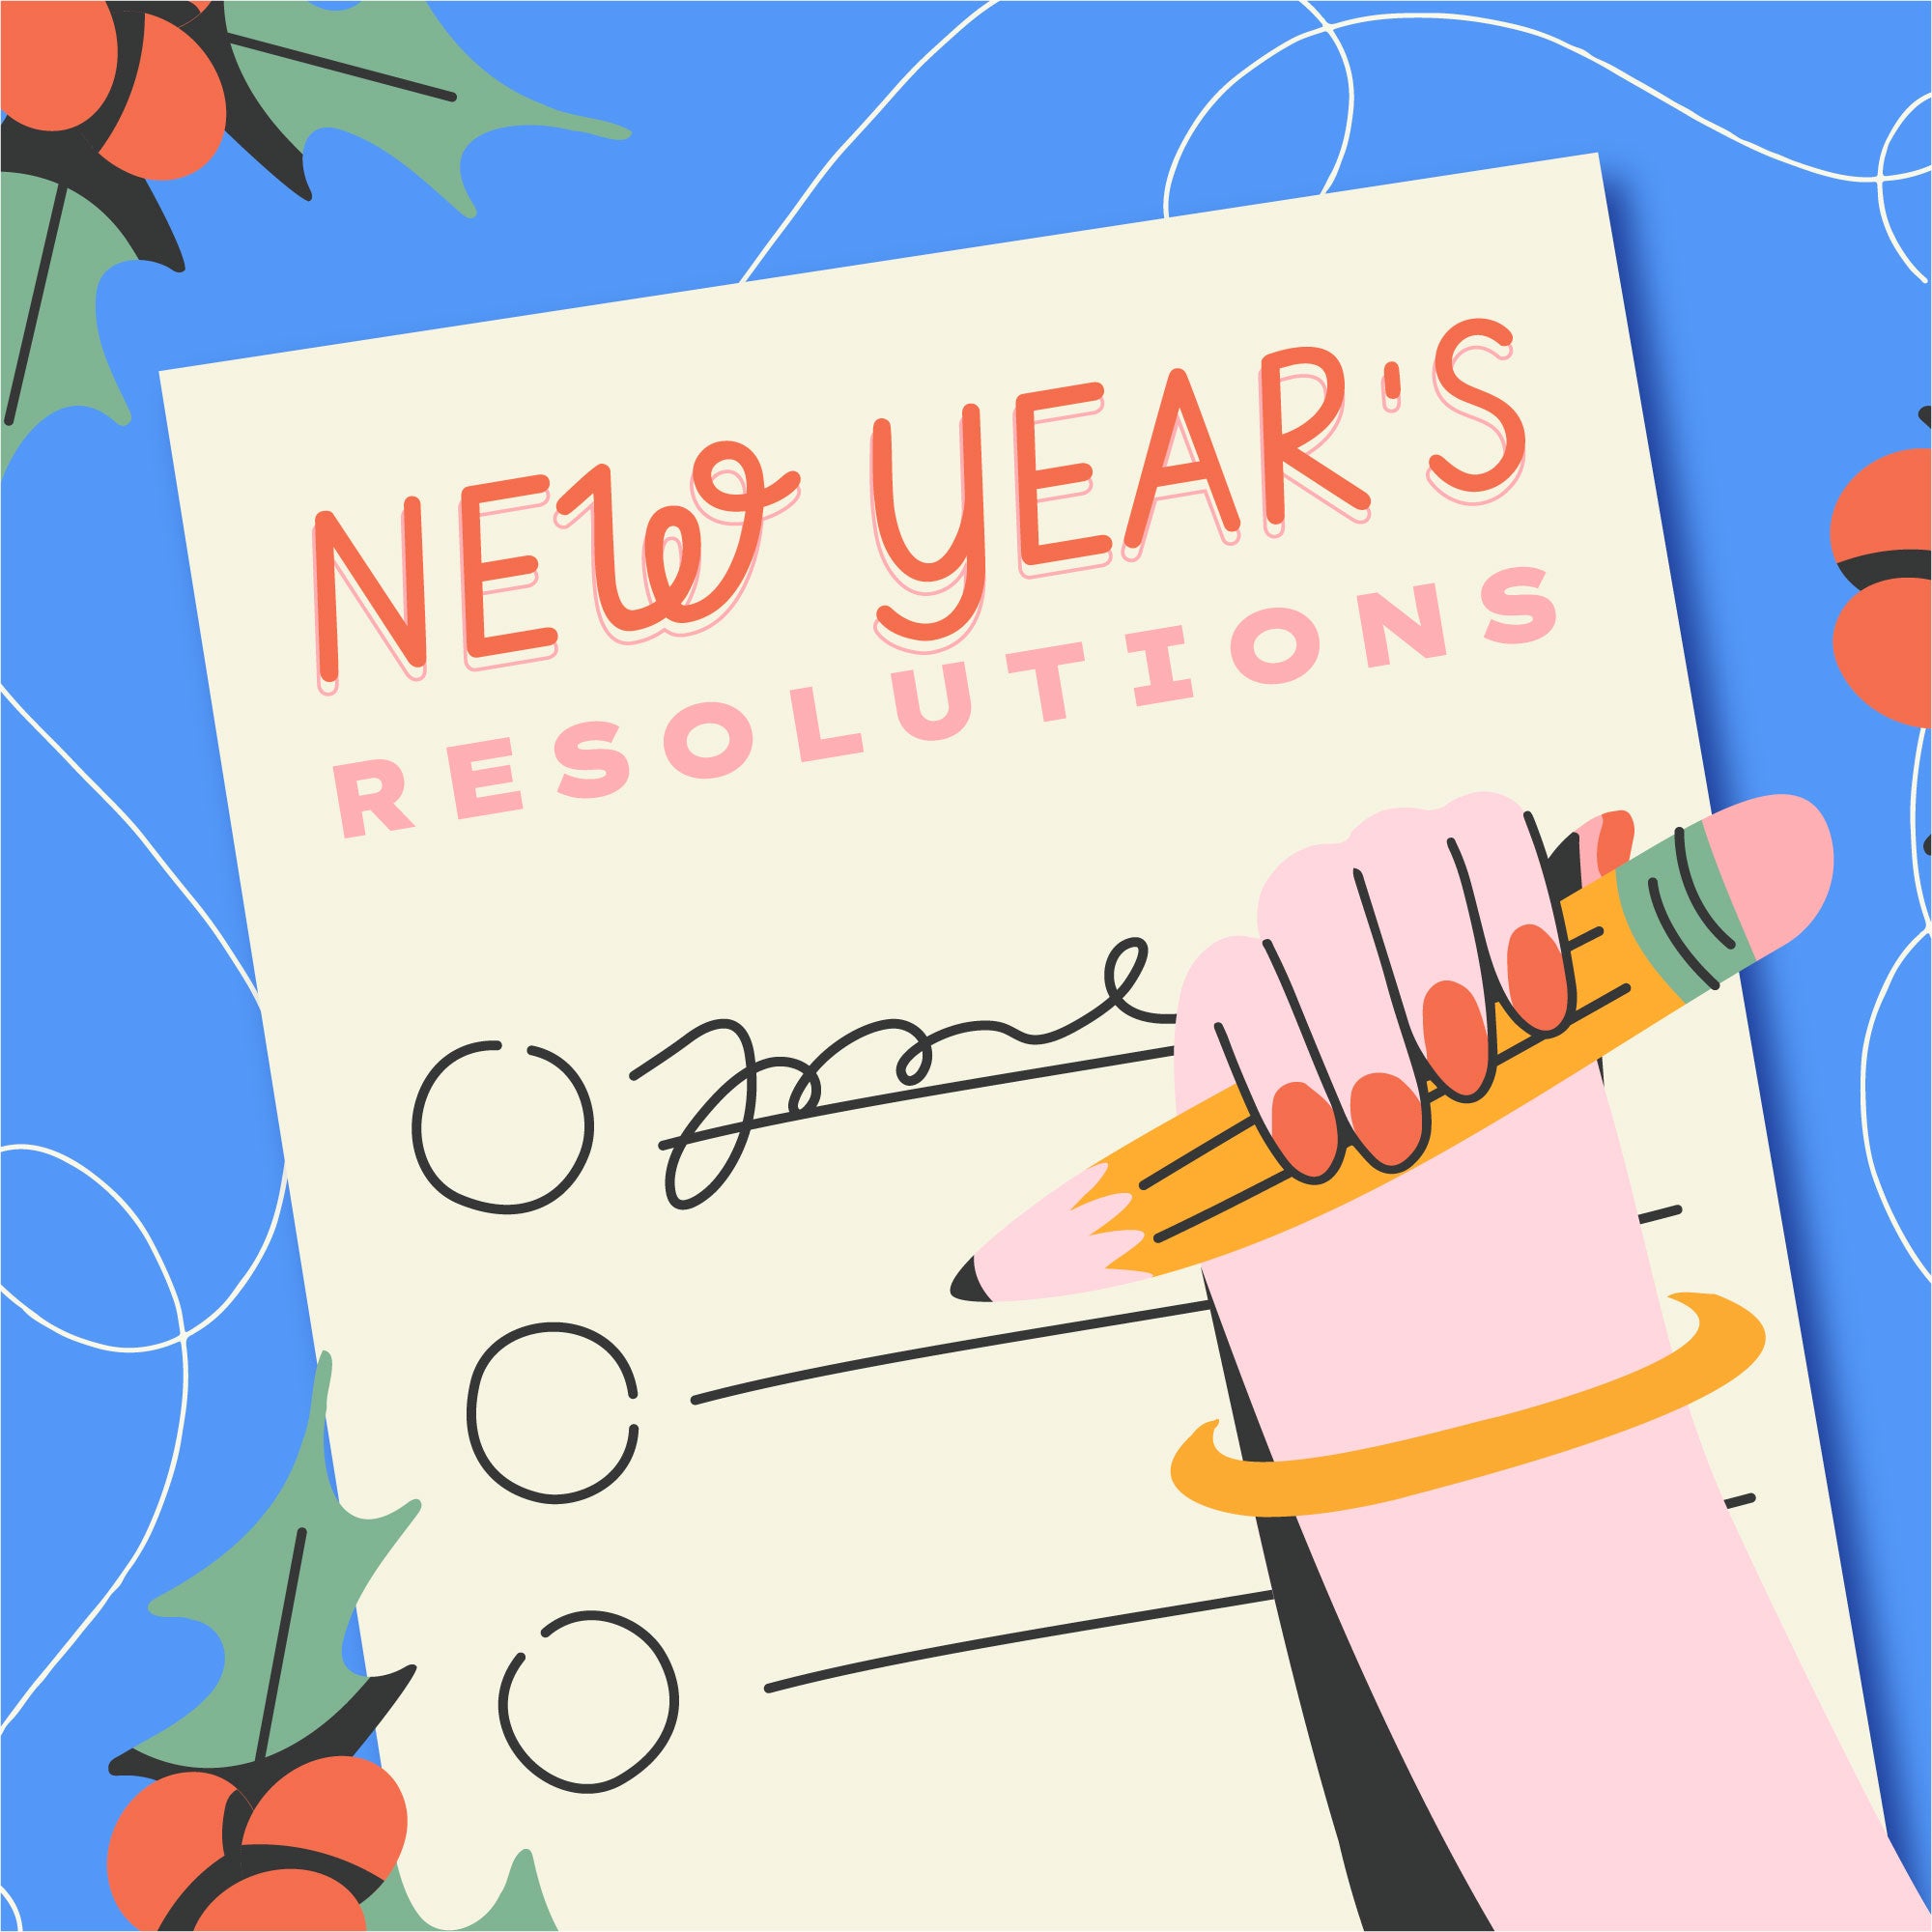 New Years Resolution 2 – Write more.